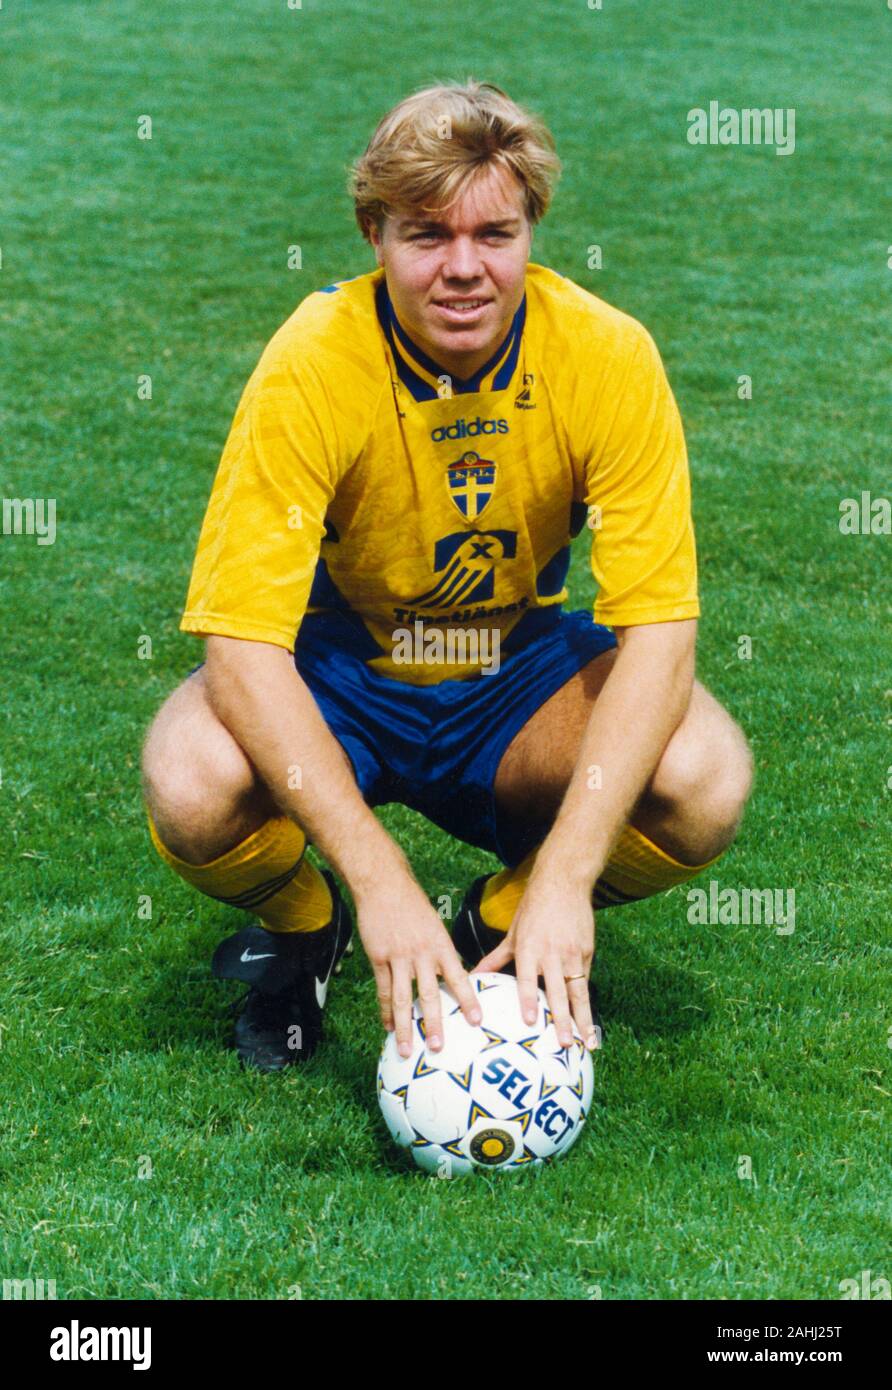 Tomas Brolin's classic Sweden shirt